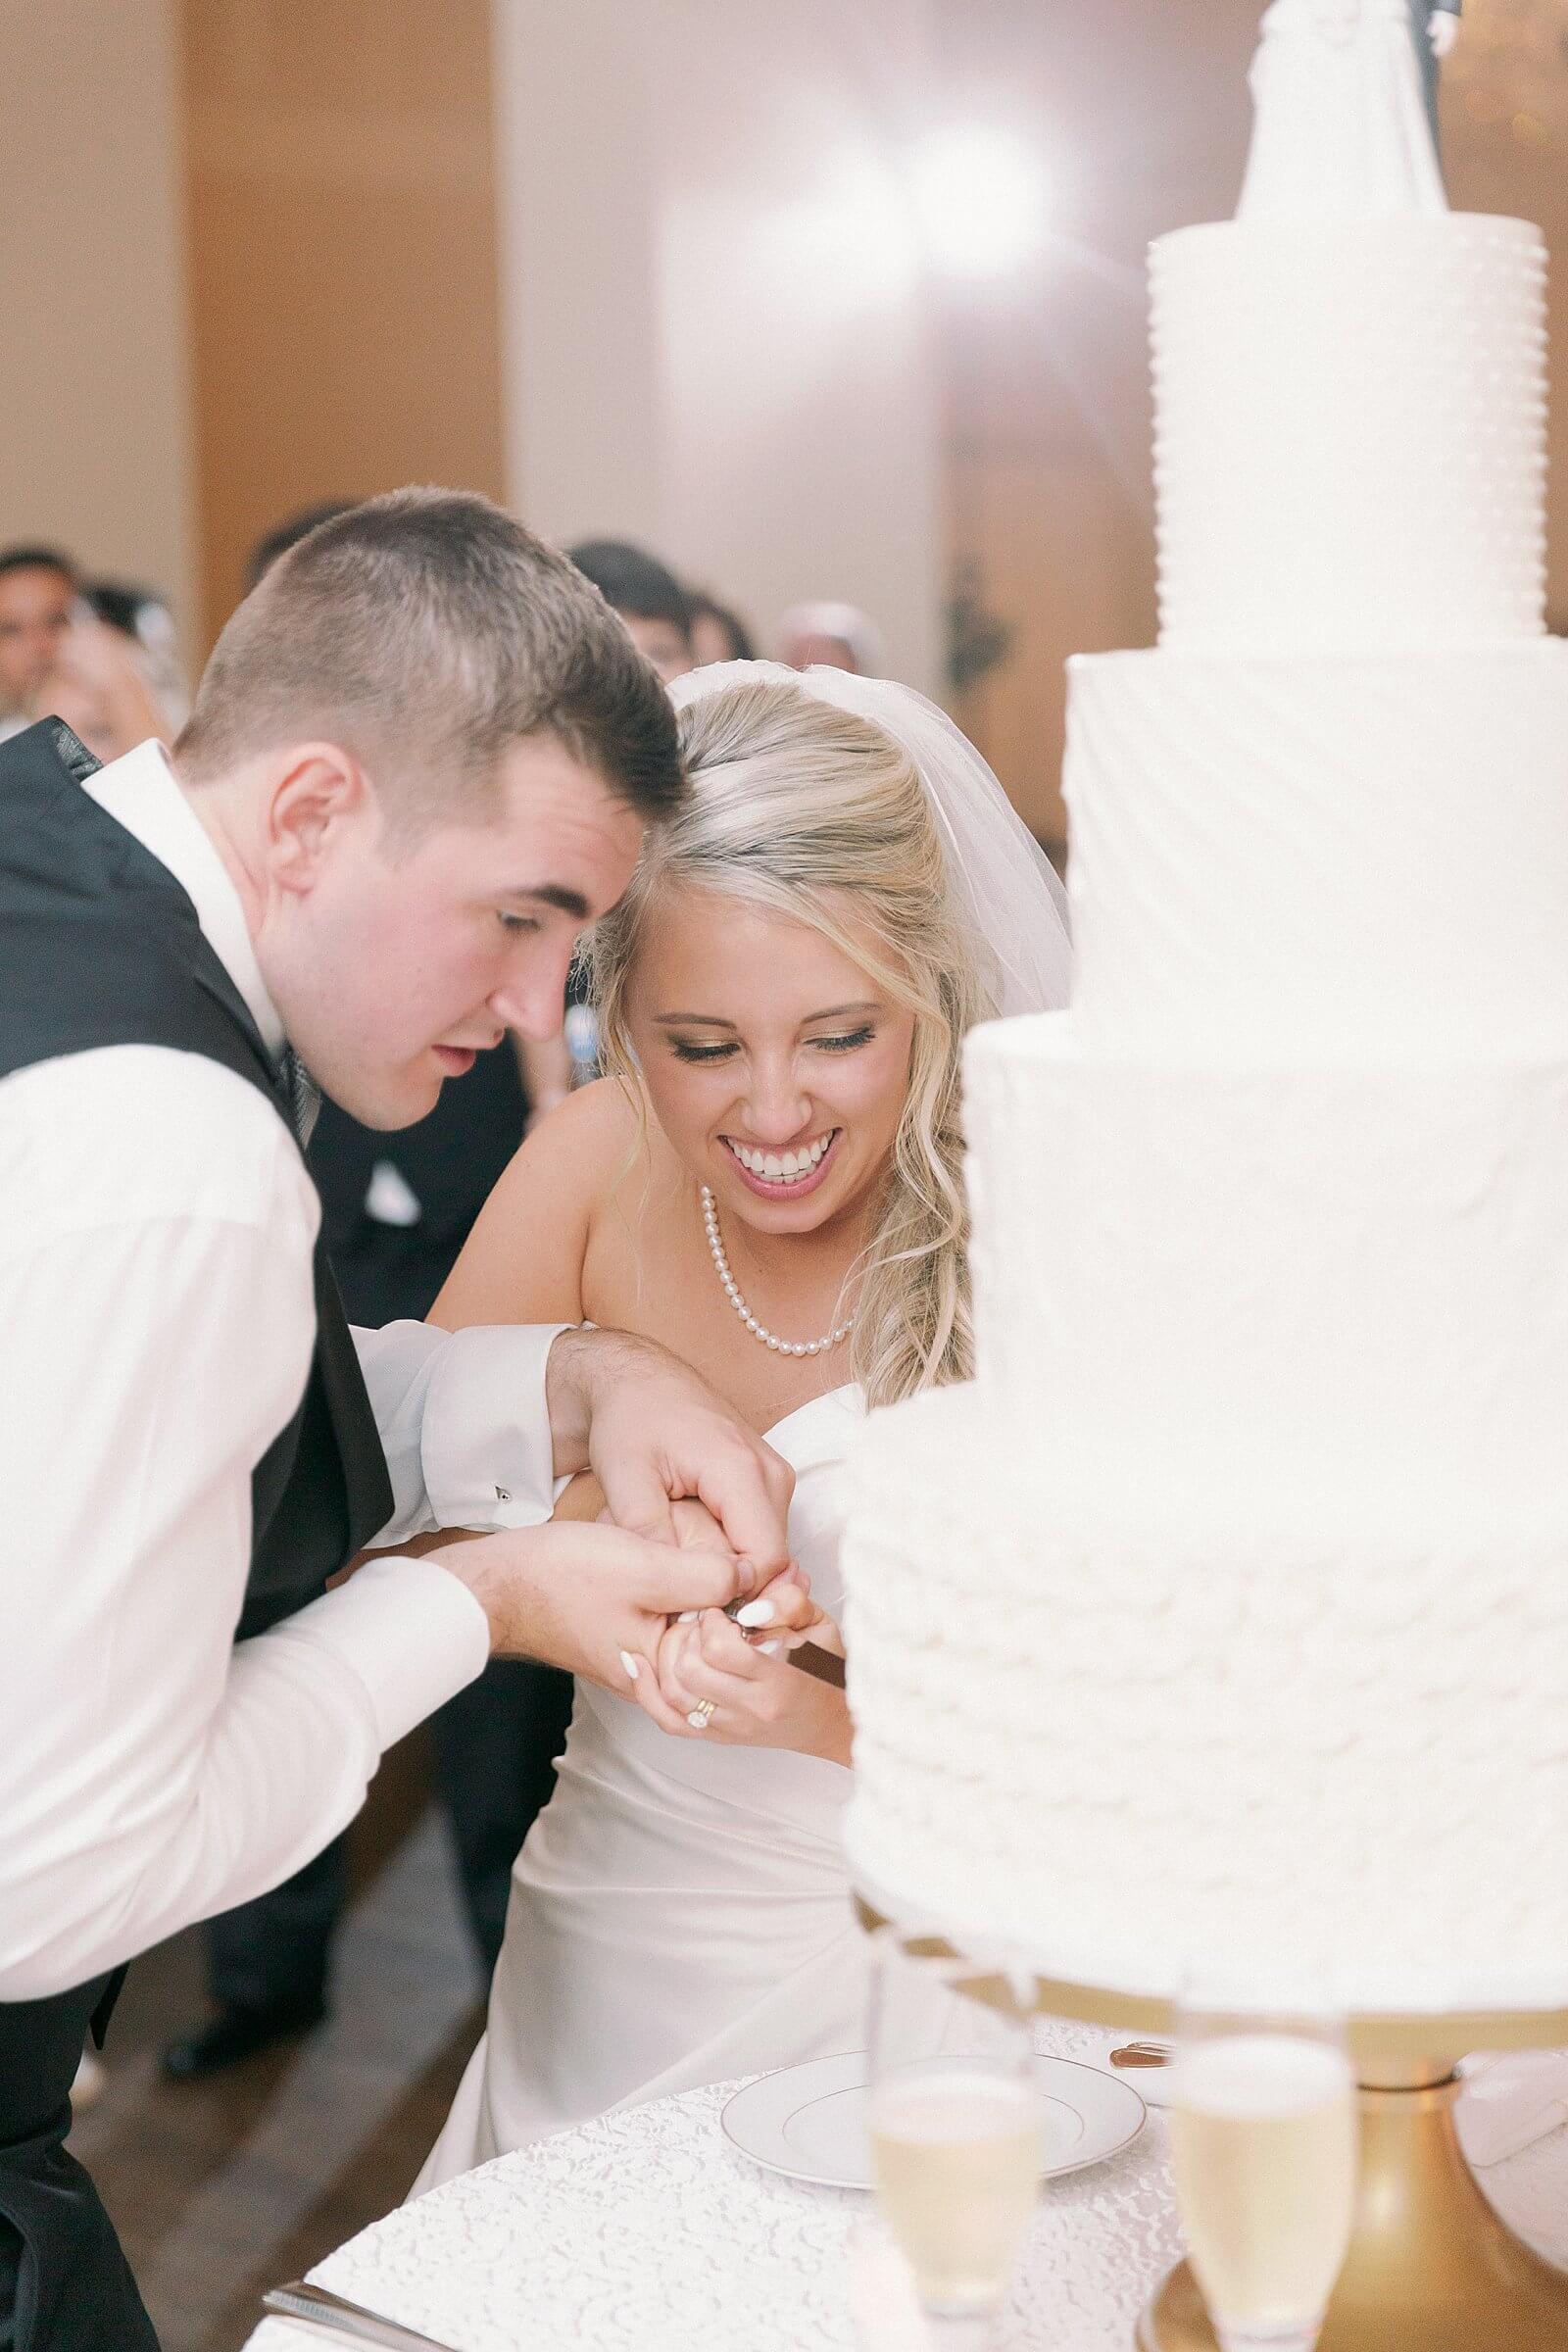 Cake cutting at a wedding at Trump Winery Grand Hall